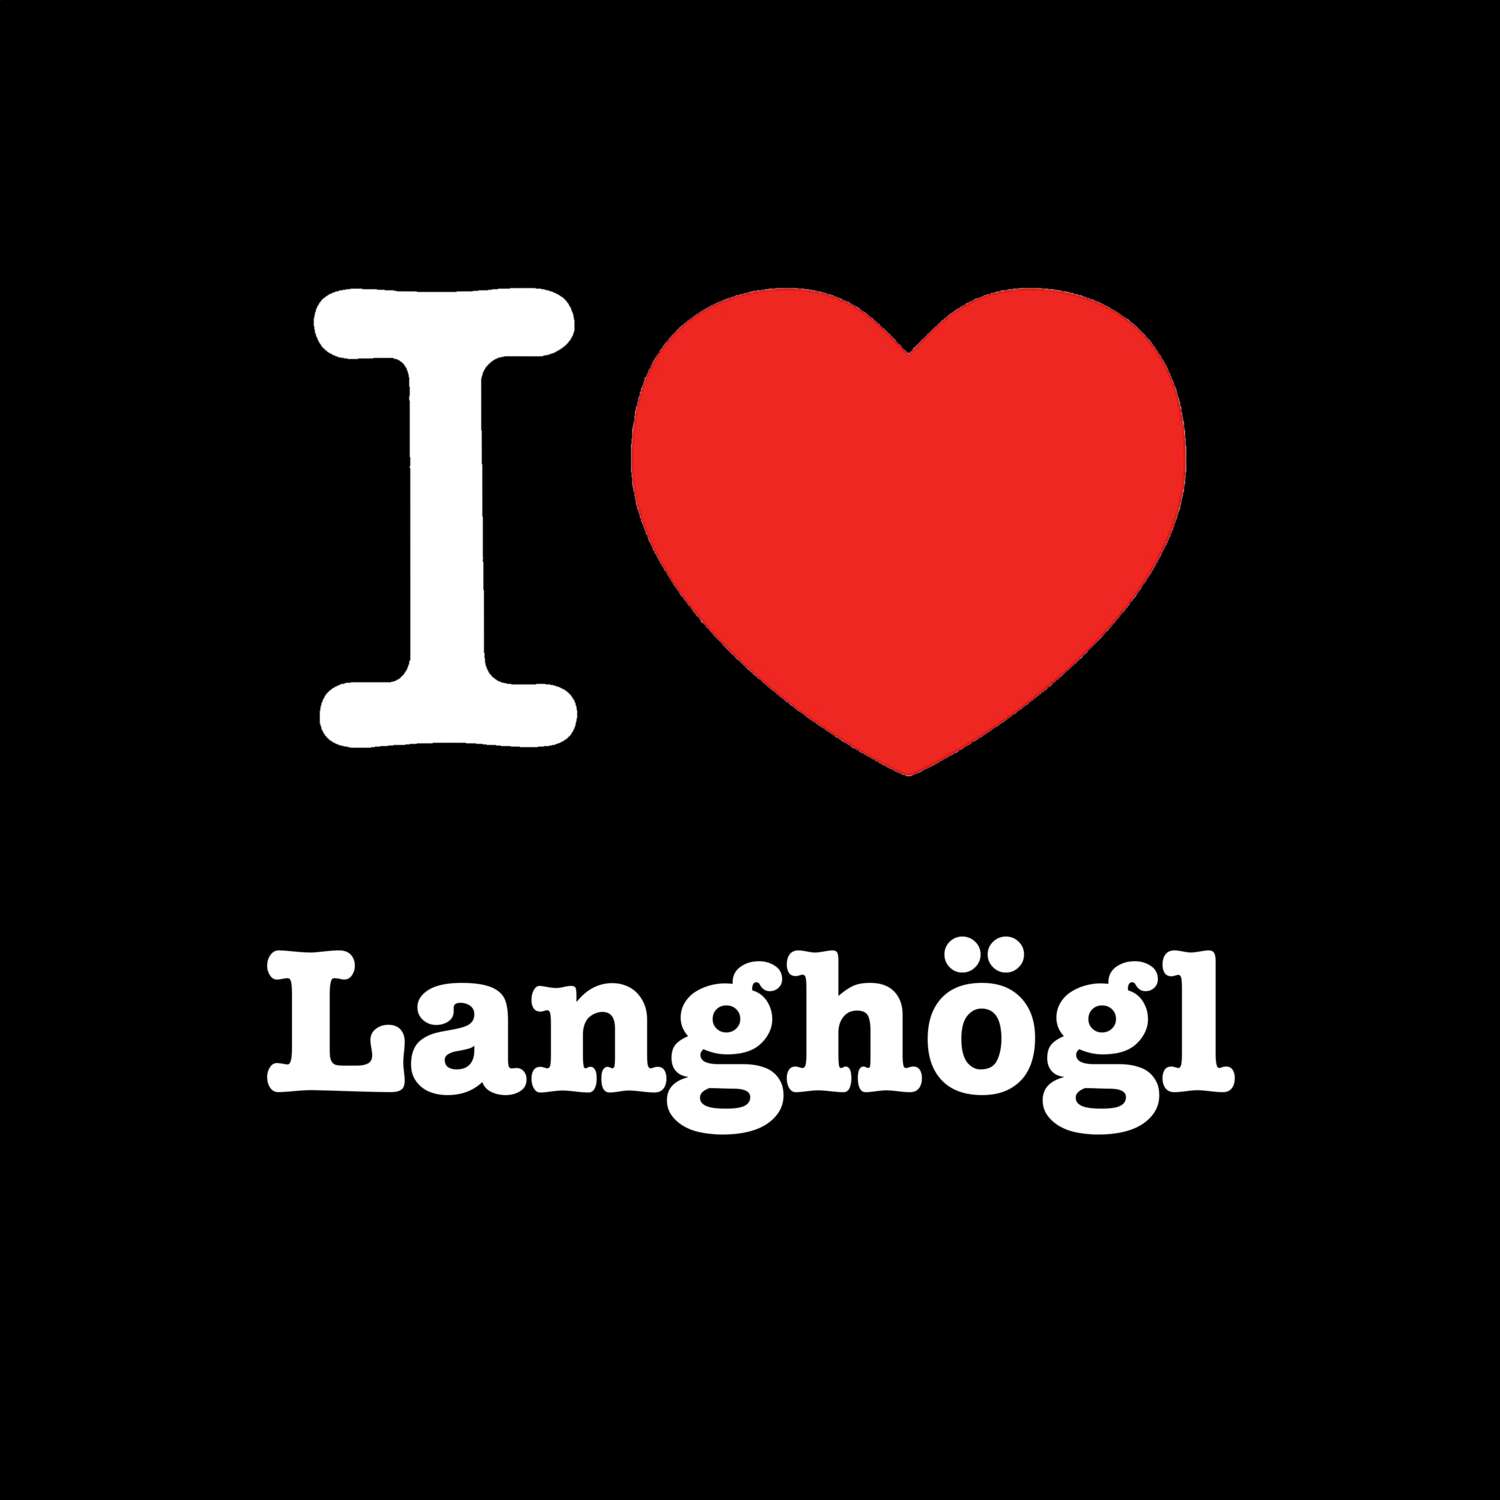 Langhögl T-Shirt »I love«